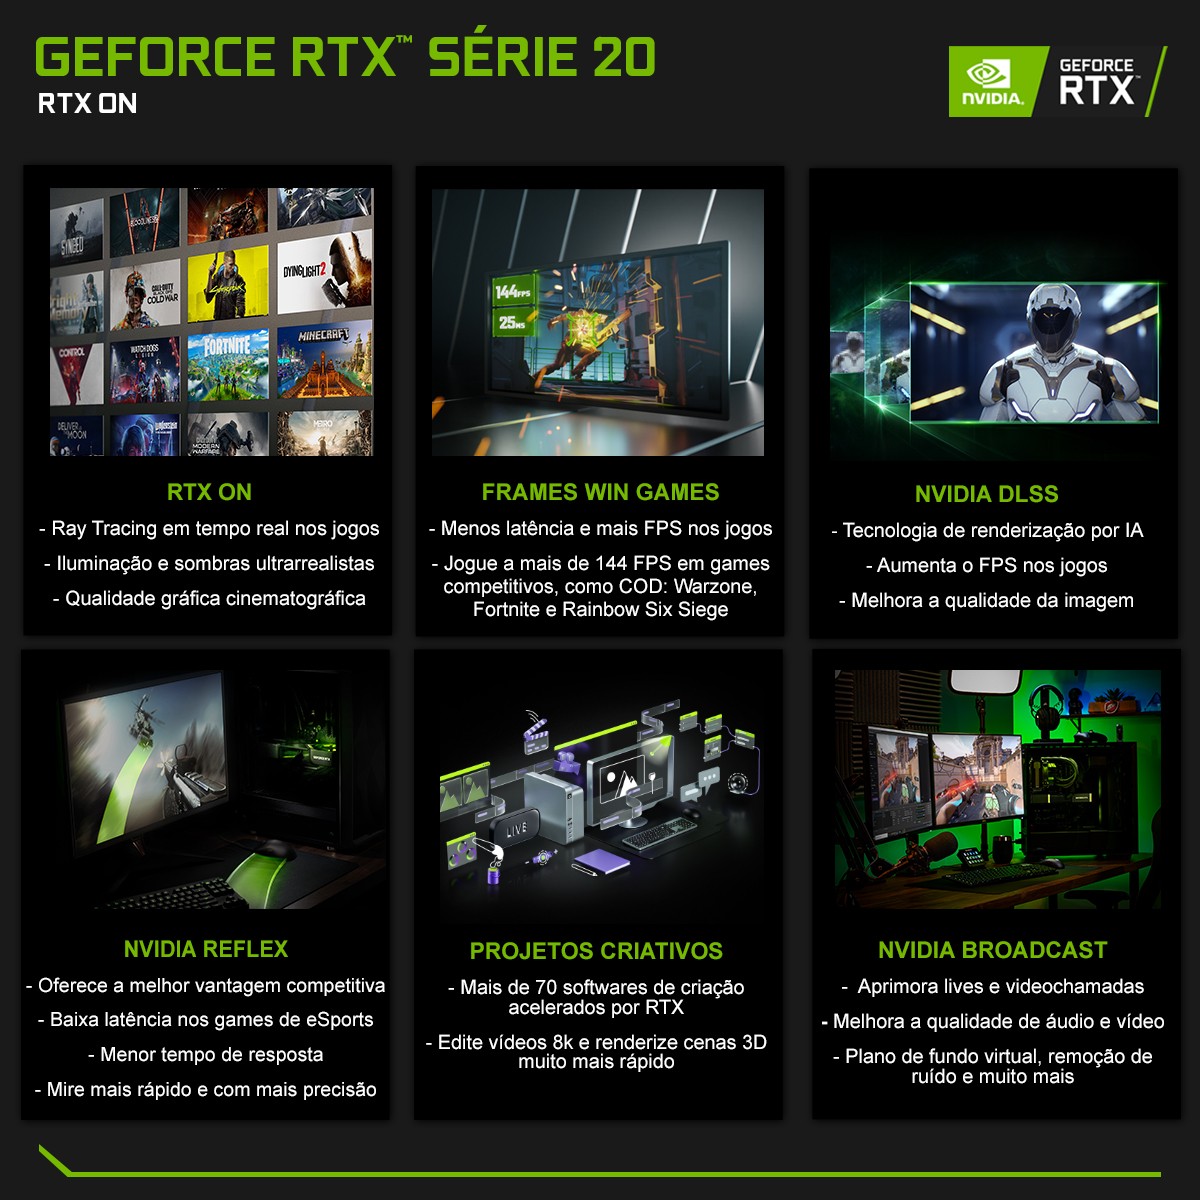 Placa de Vídeo Galax GeForce RTX 2060 (1-Click OC), 6GB GDDR6, 192Bit, 26NRL7HP68CX